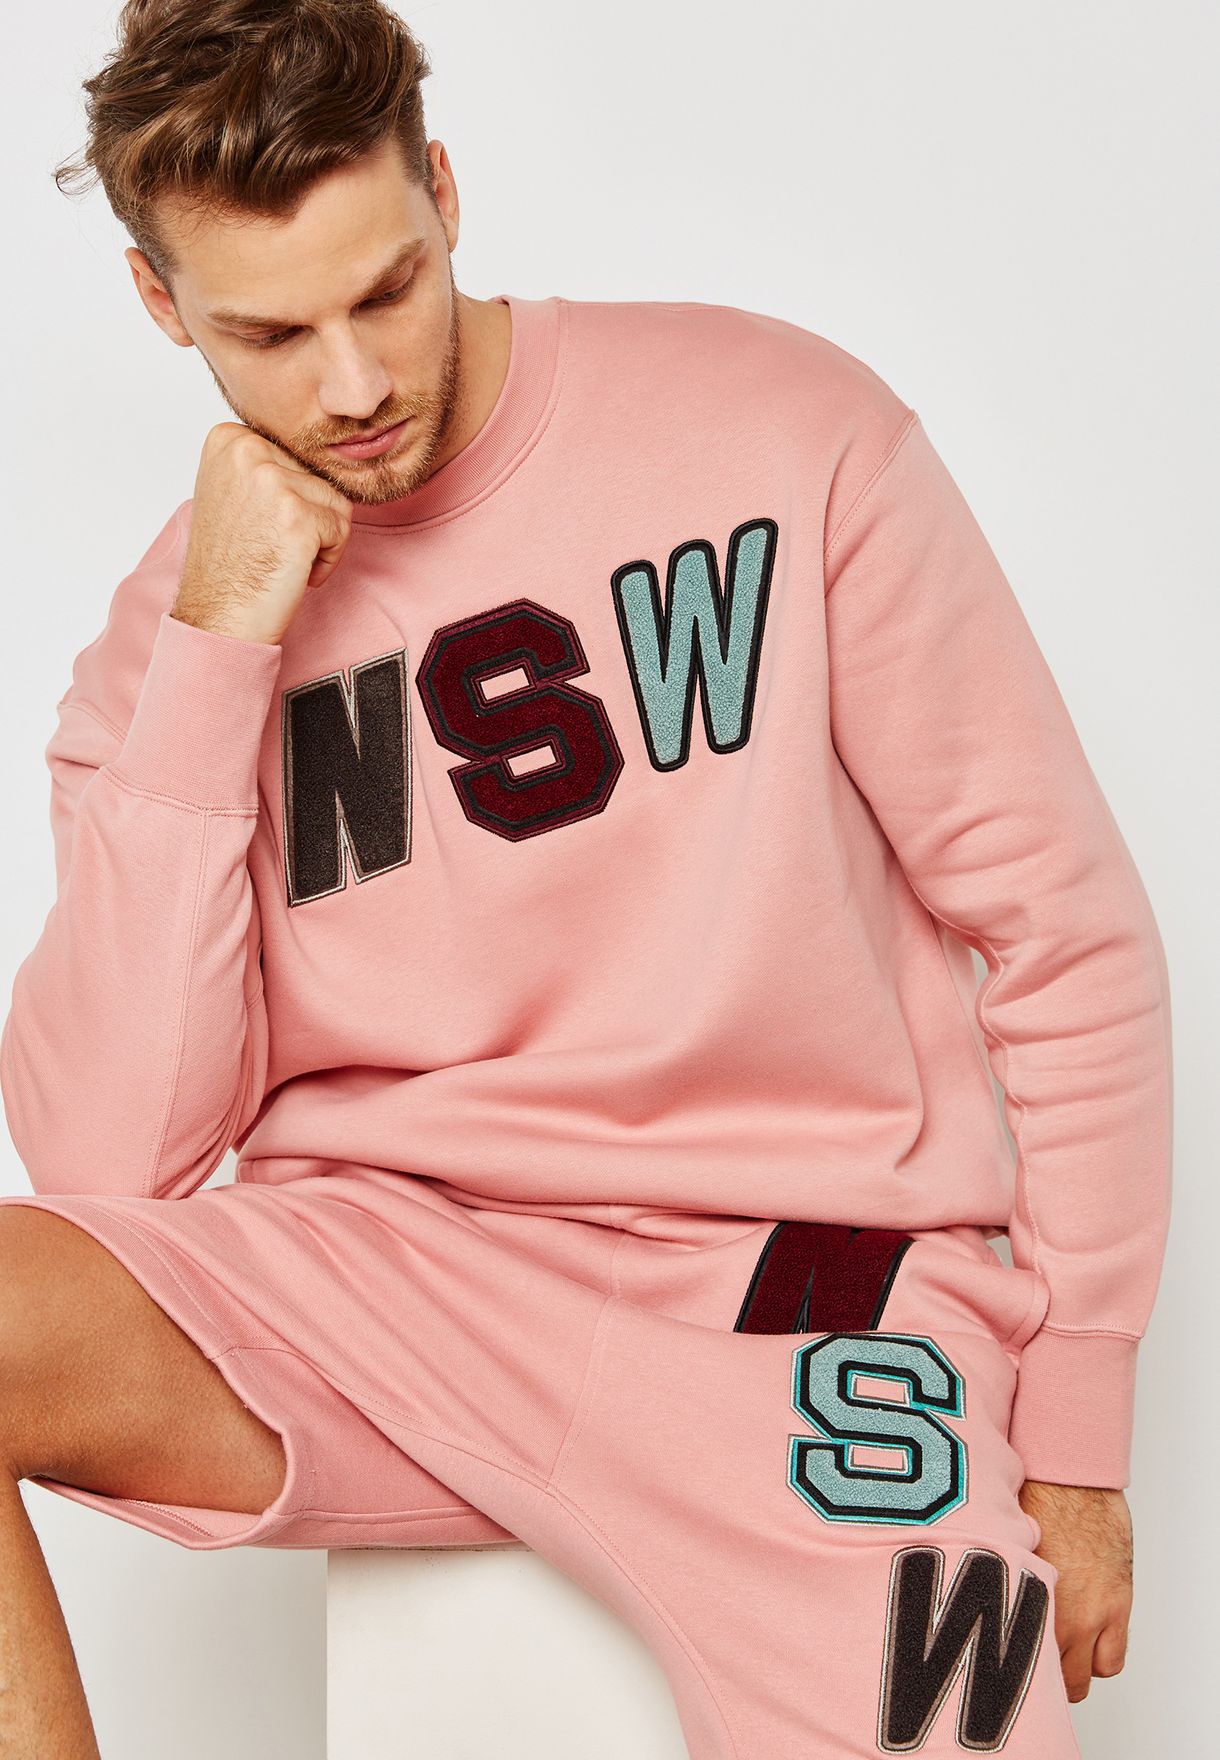 nsw pink sweatshirt